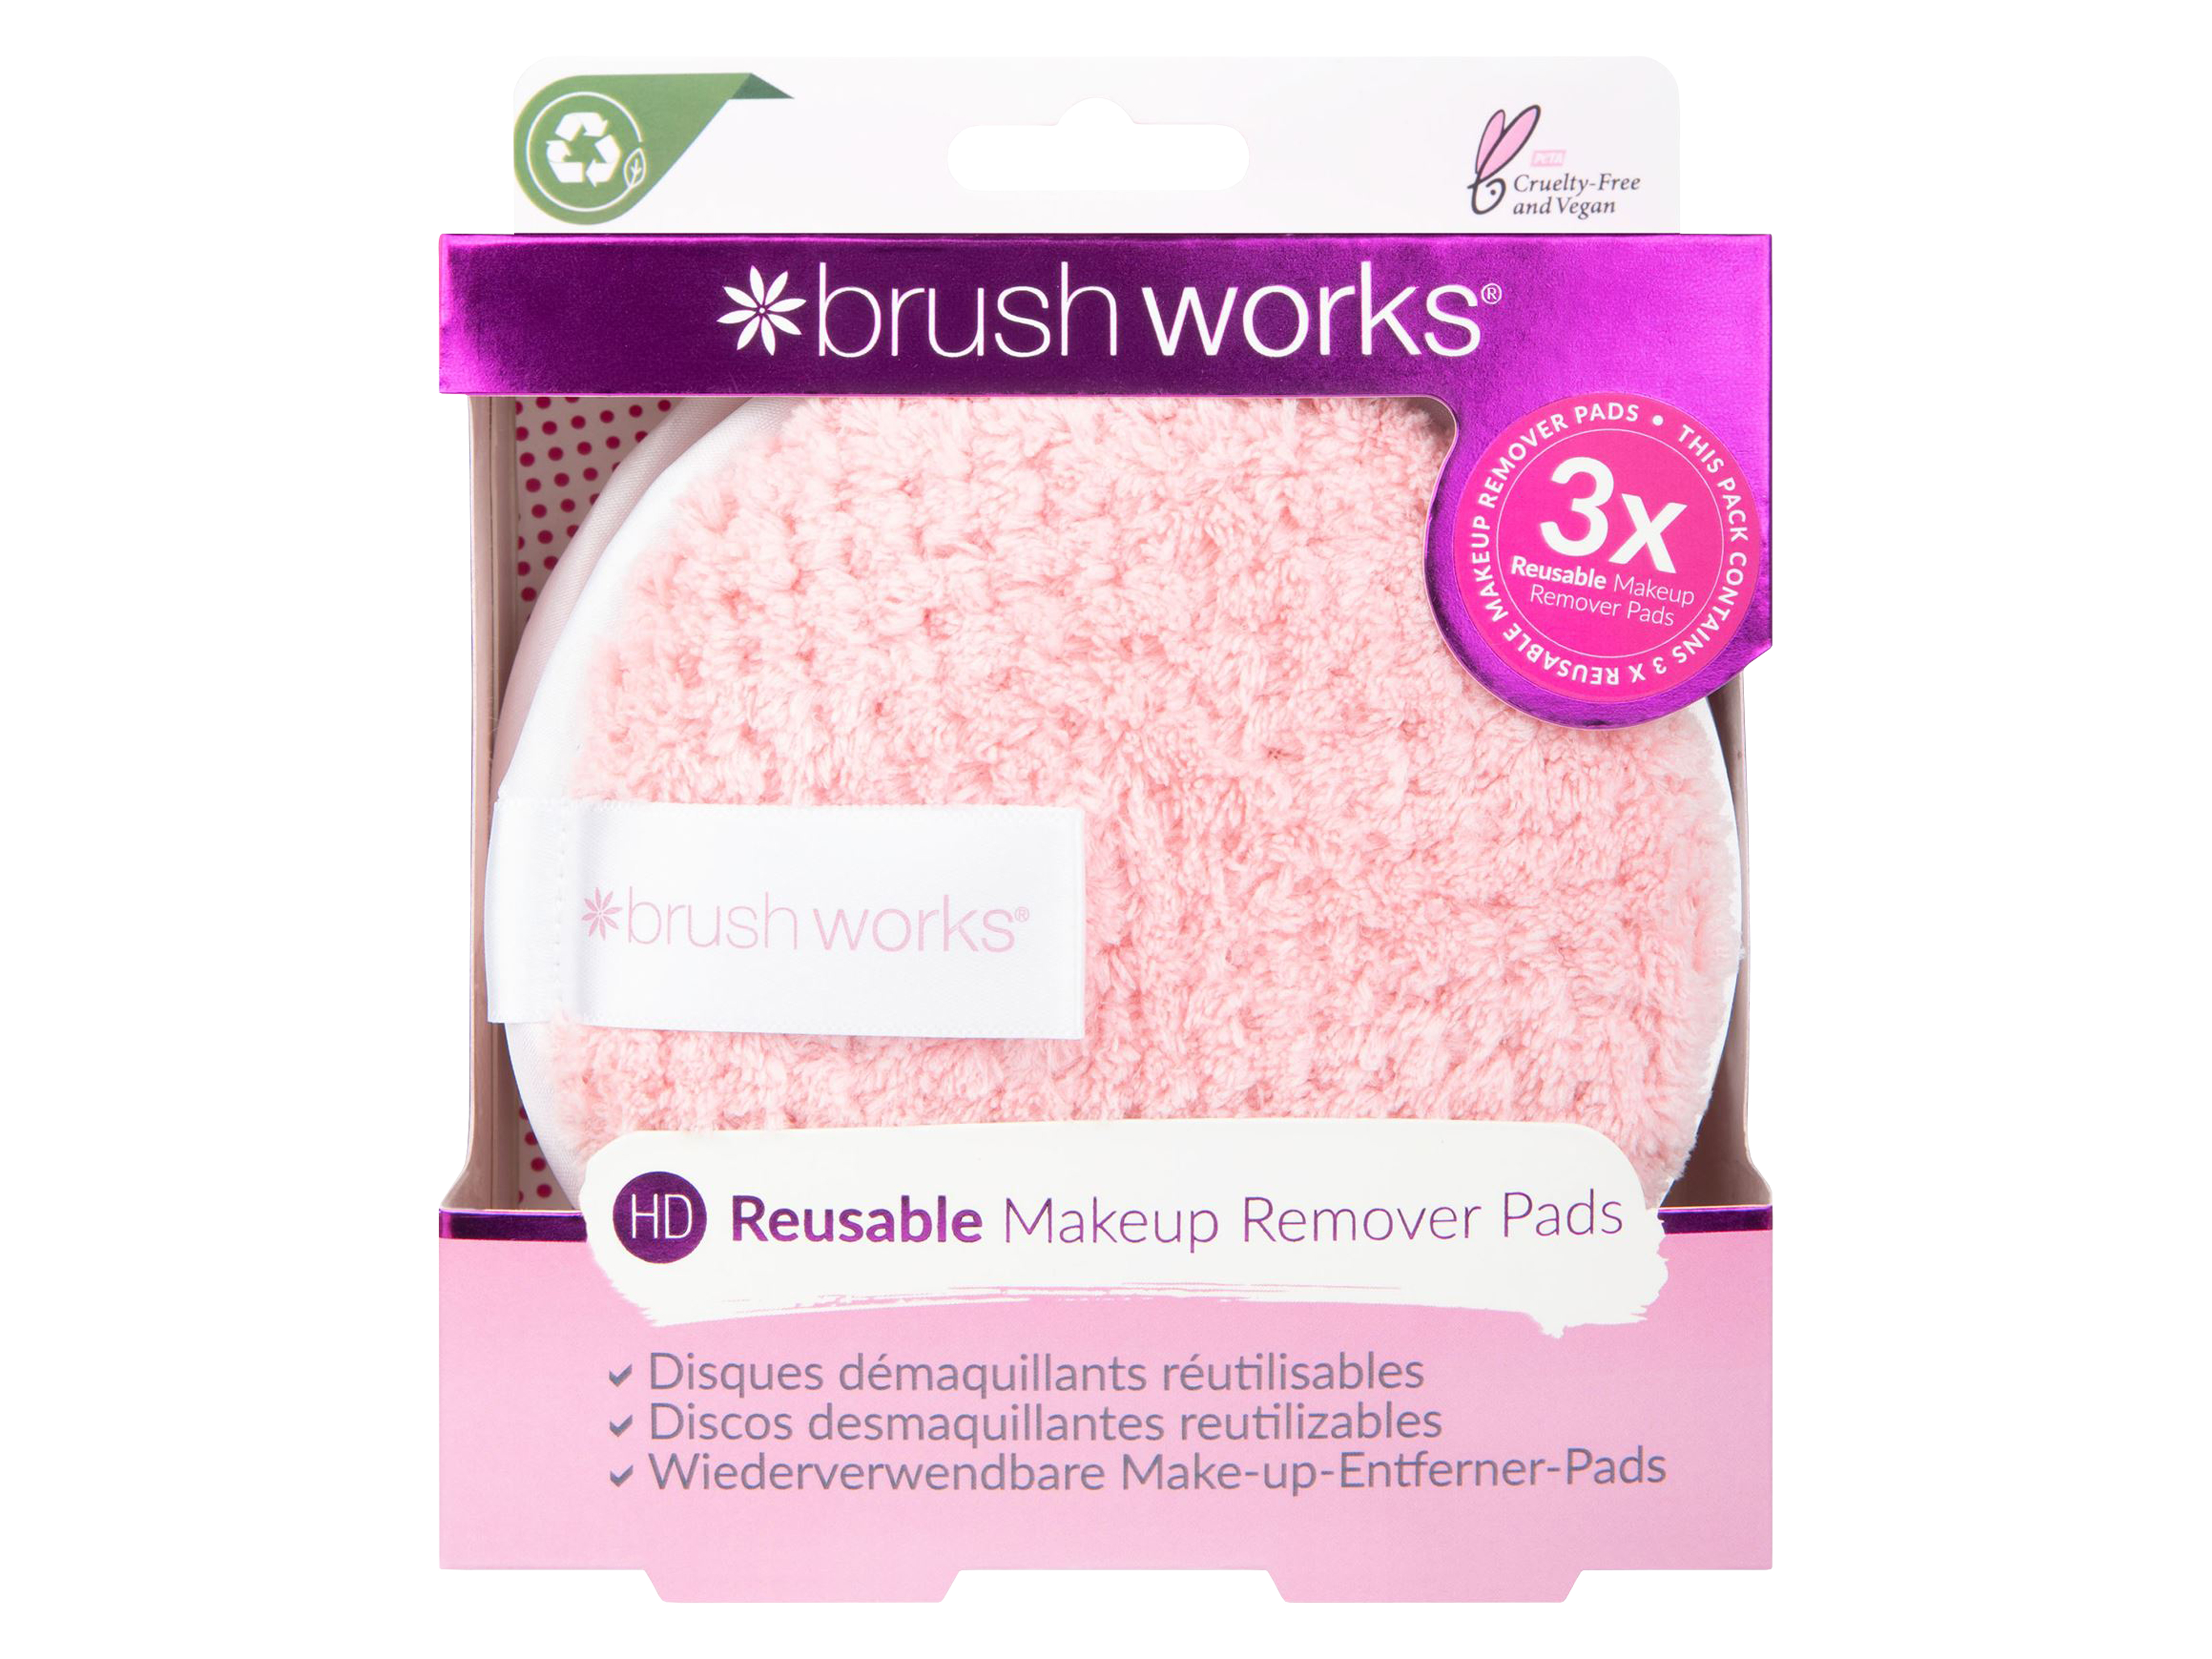 Brushworks HD Reusable Makeup Remover Pads, 3 stk.